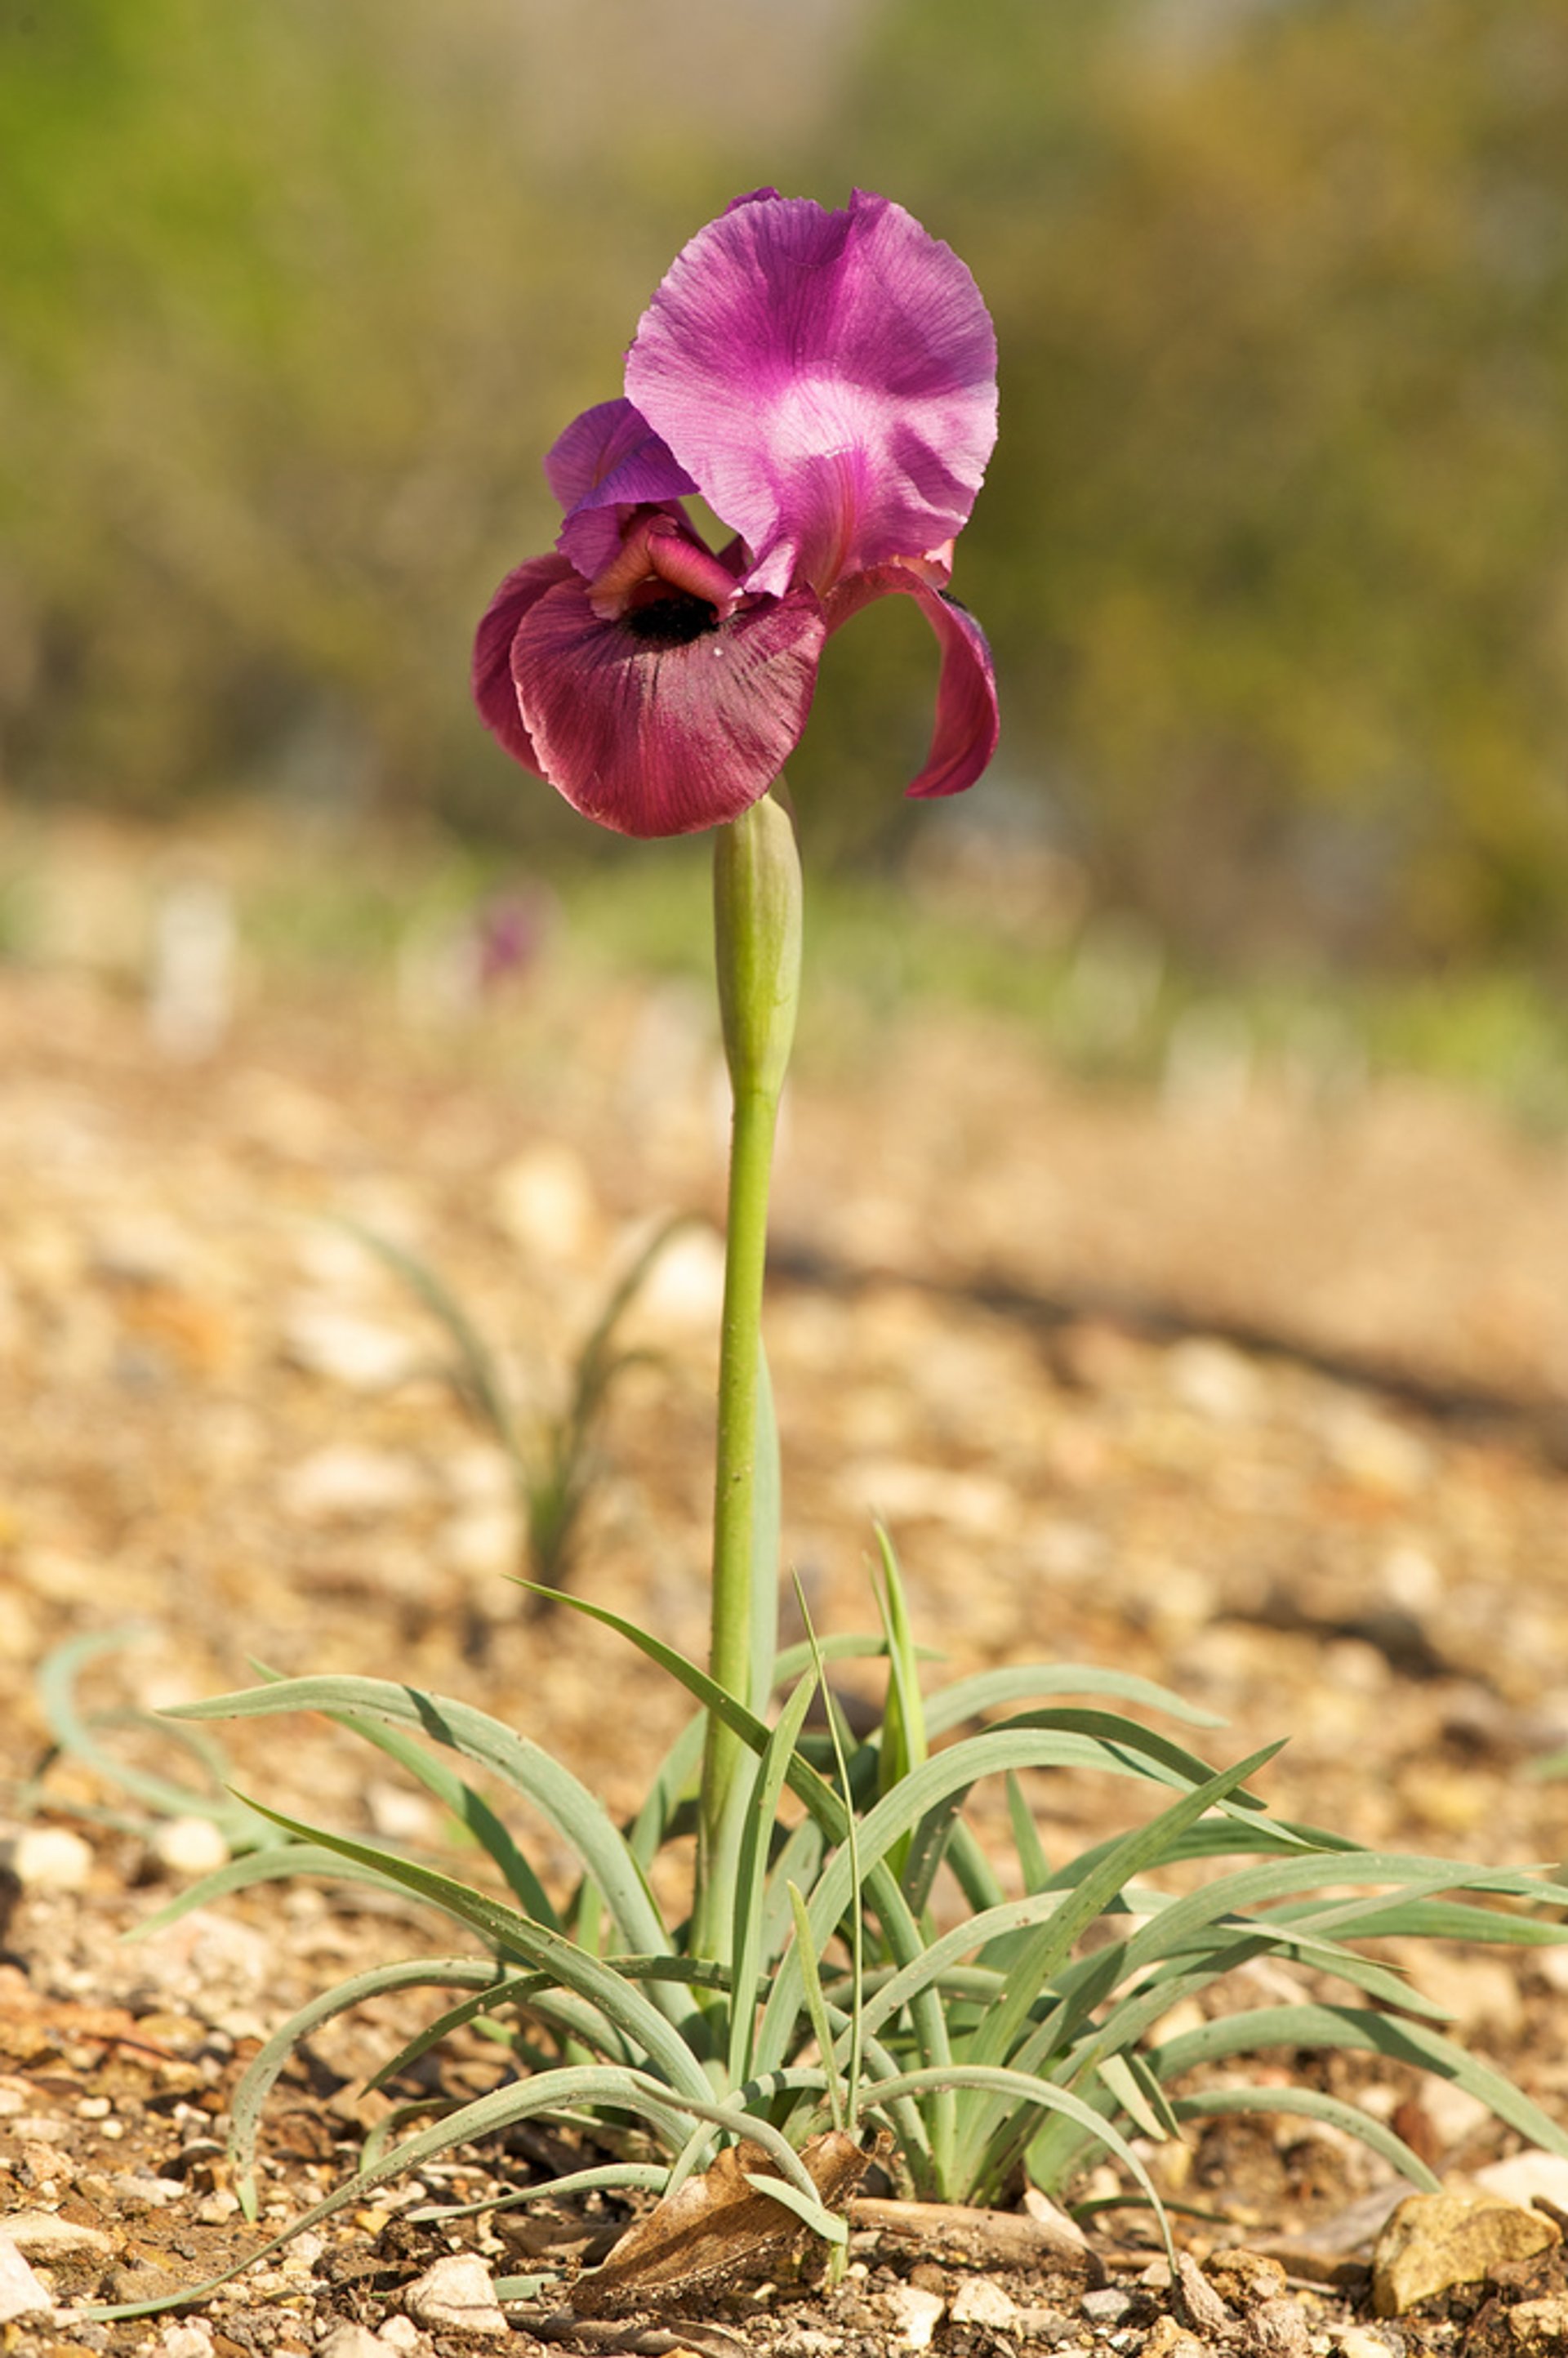 Negev Iris in Bloom